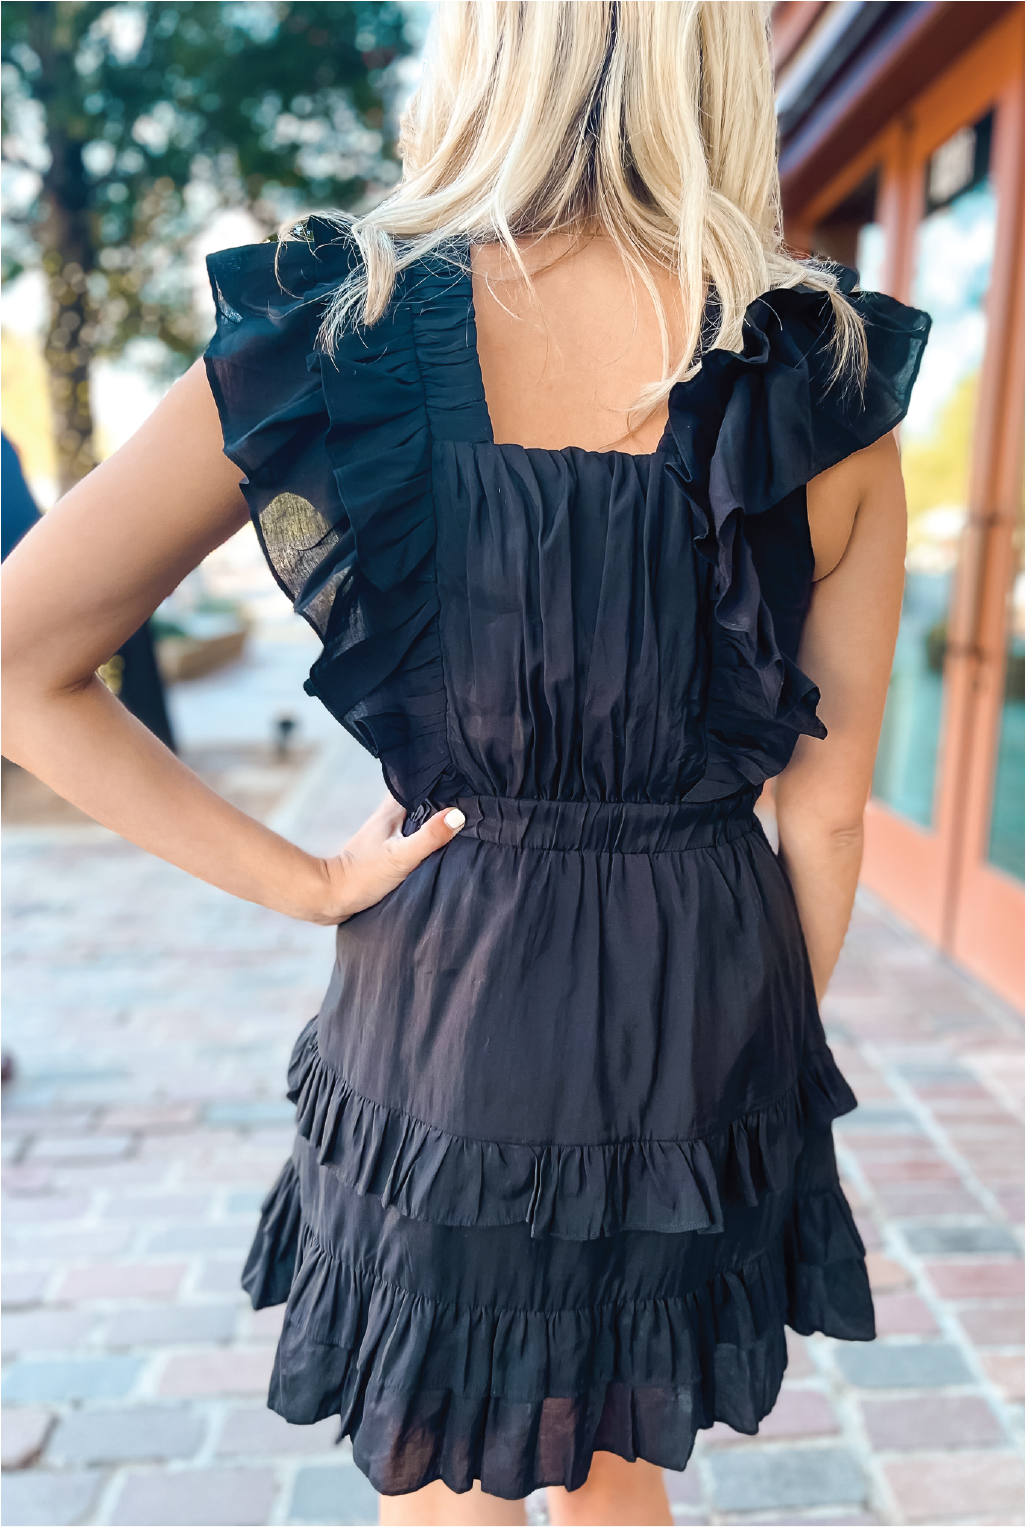 Ruffle Detail Mini Dress - Black